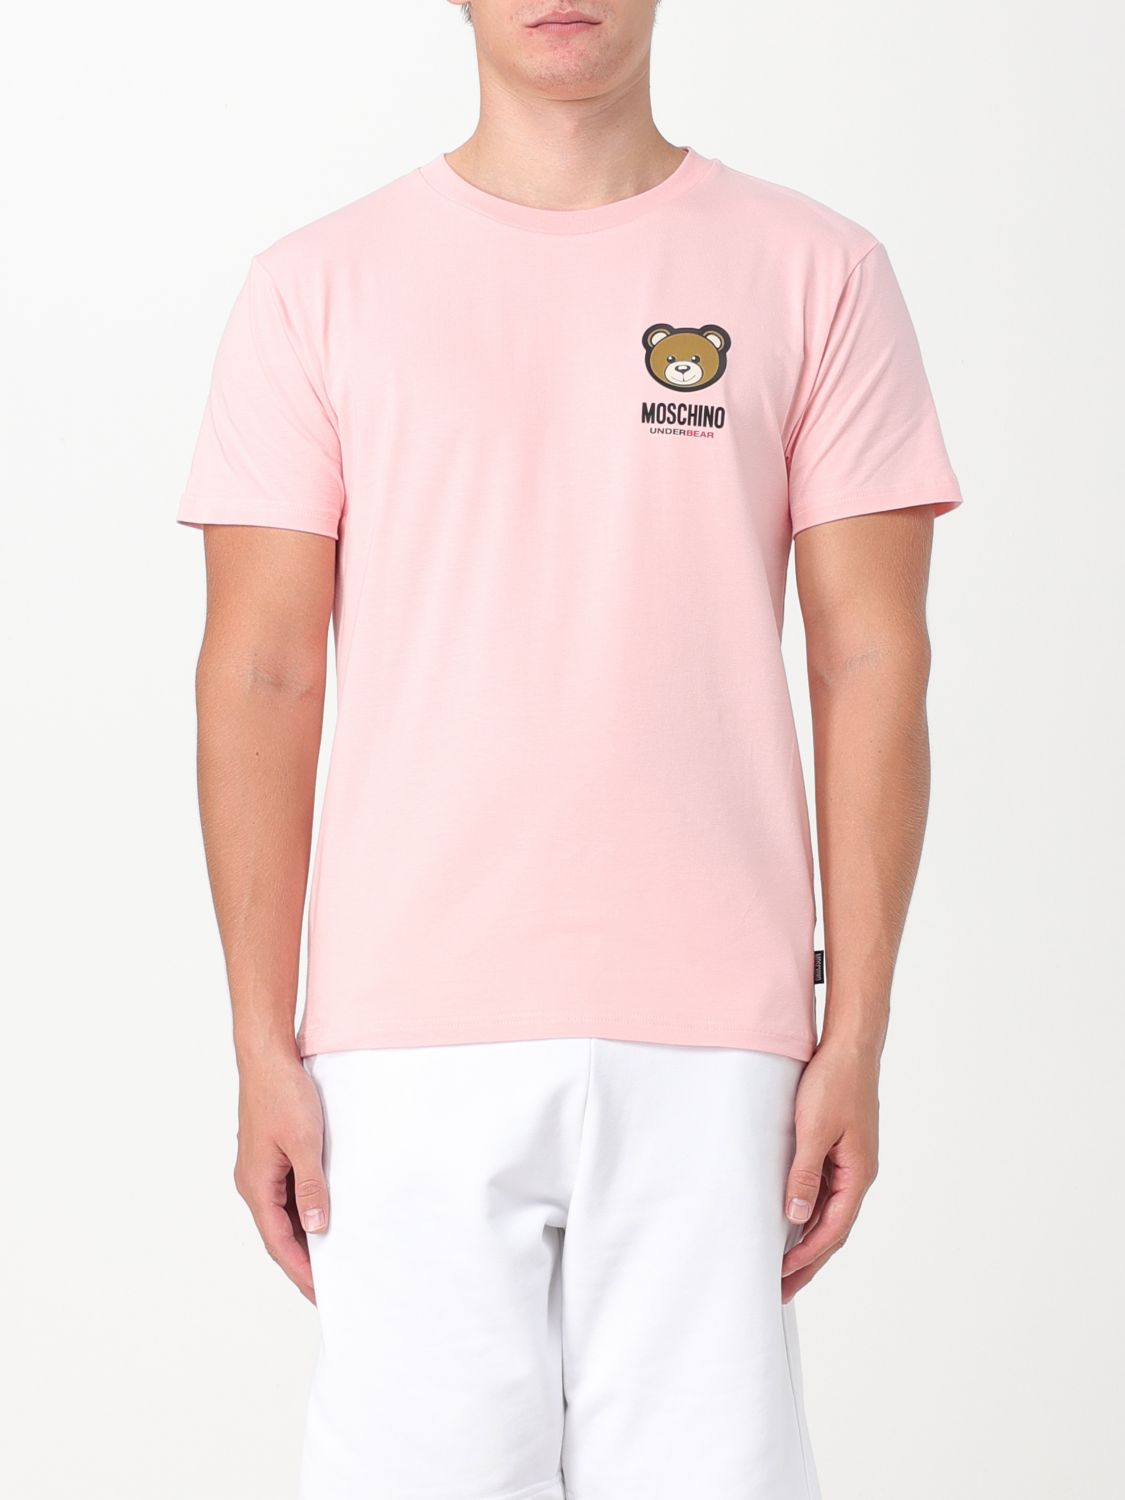 Moschino Couture T-shirt  Herren Farbe Pink